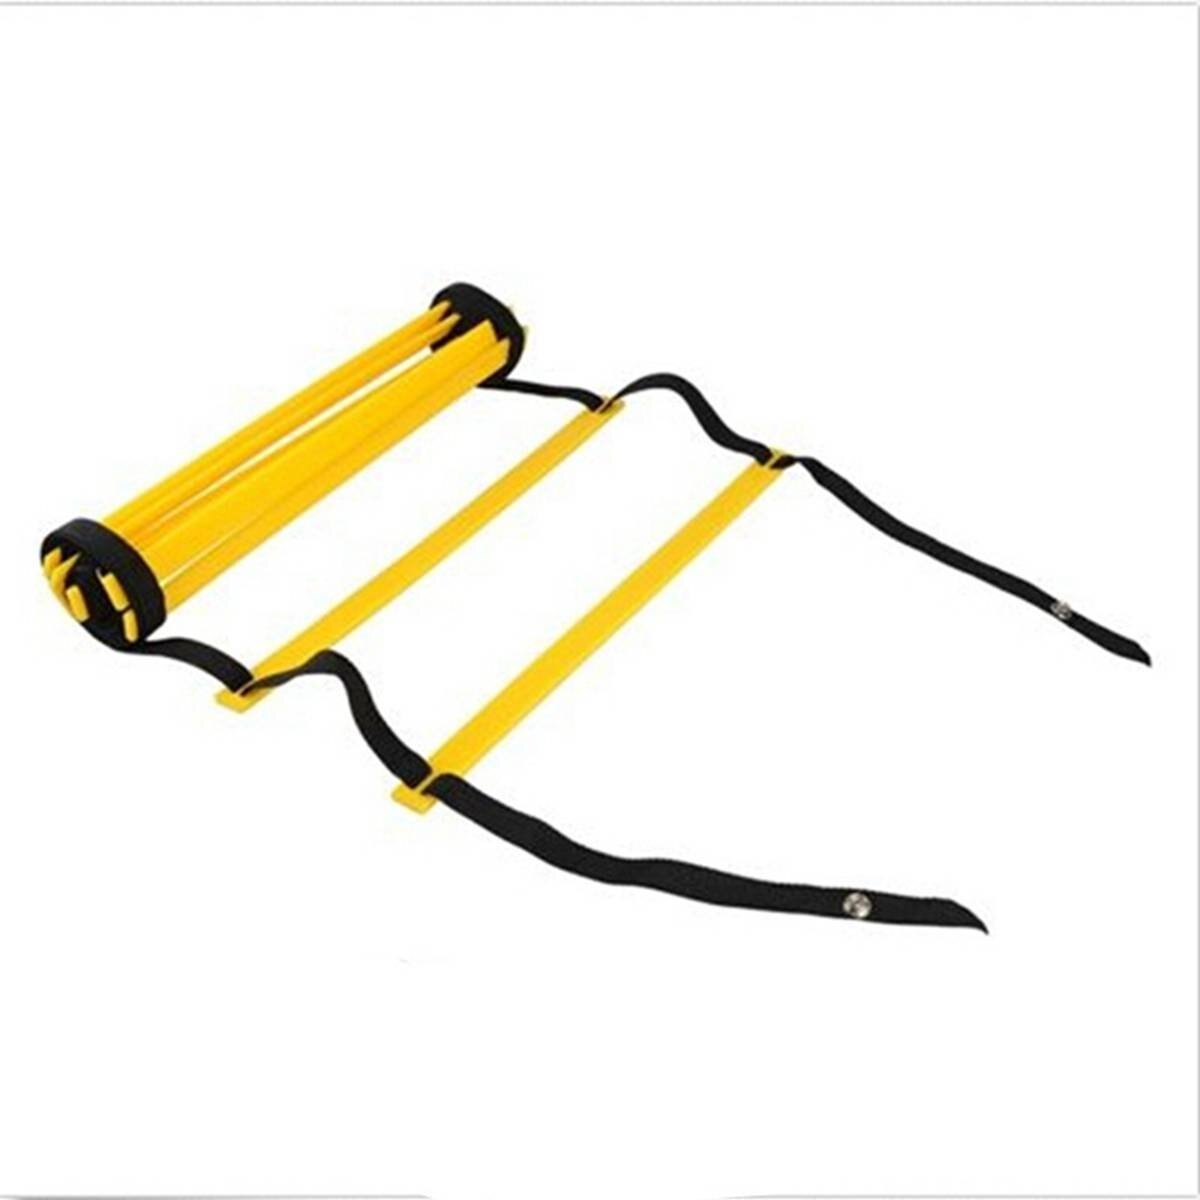 8-Rung 4M Agility Ladder Coördinatie Ladder Voor Snelheid Voetbal Voetbal Fitness Voeten Training, geel + Zwart